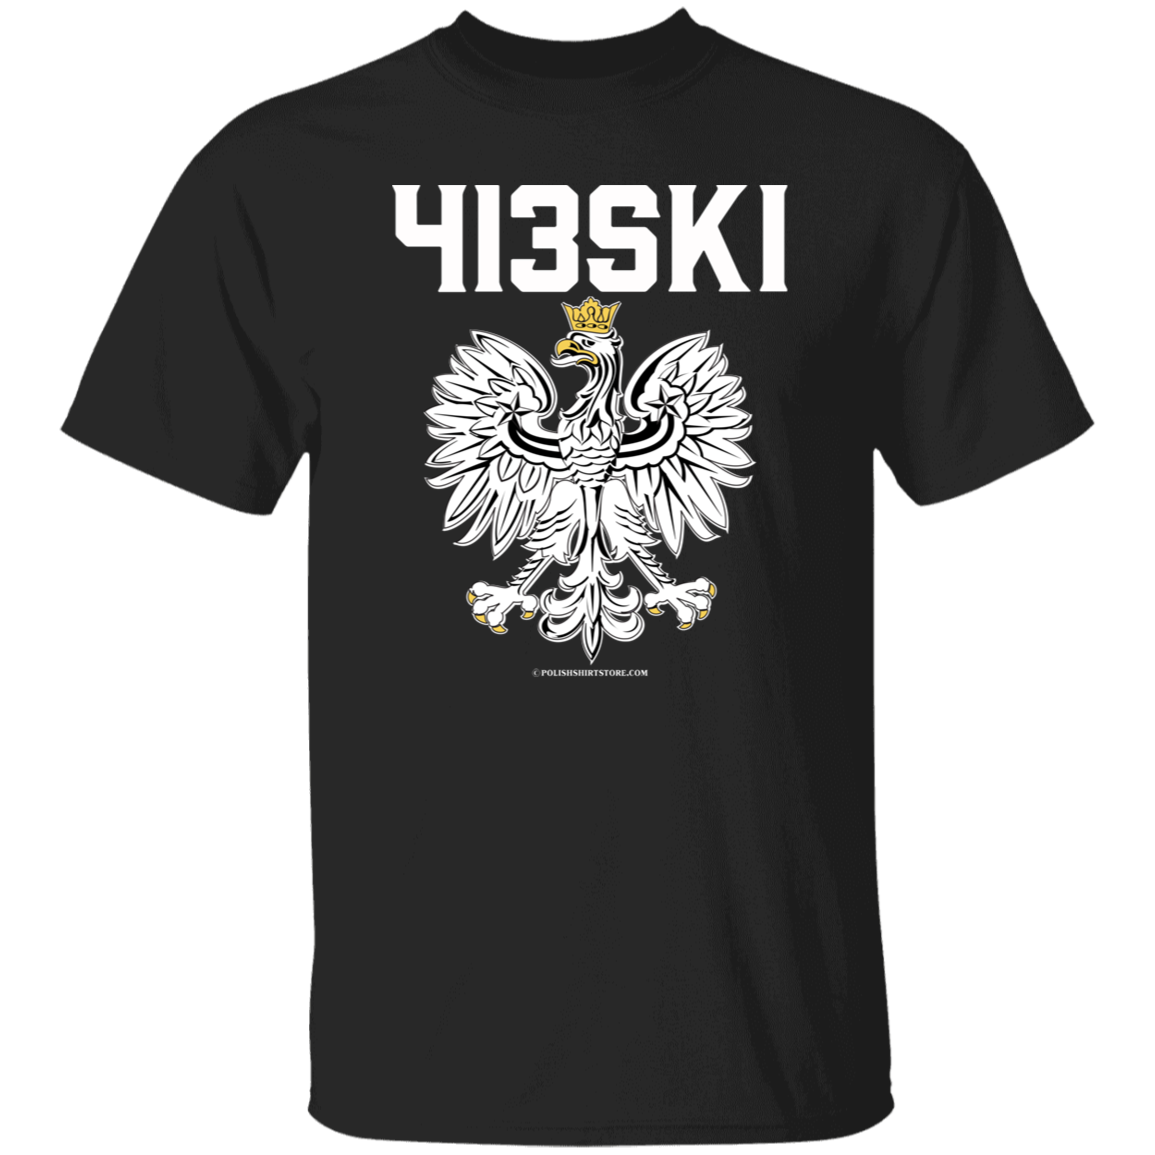 413SKI Apparel CustomCat G500 5.3 oz. T-Shirt Black S